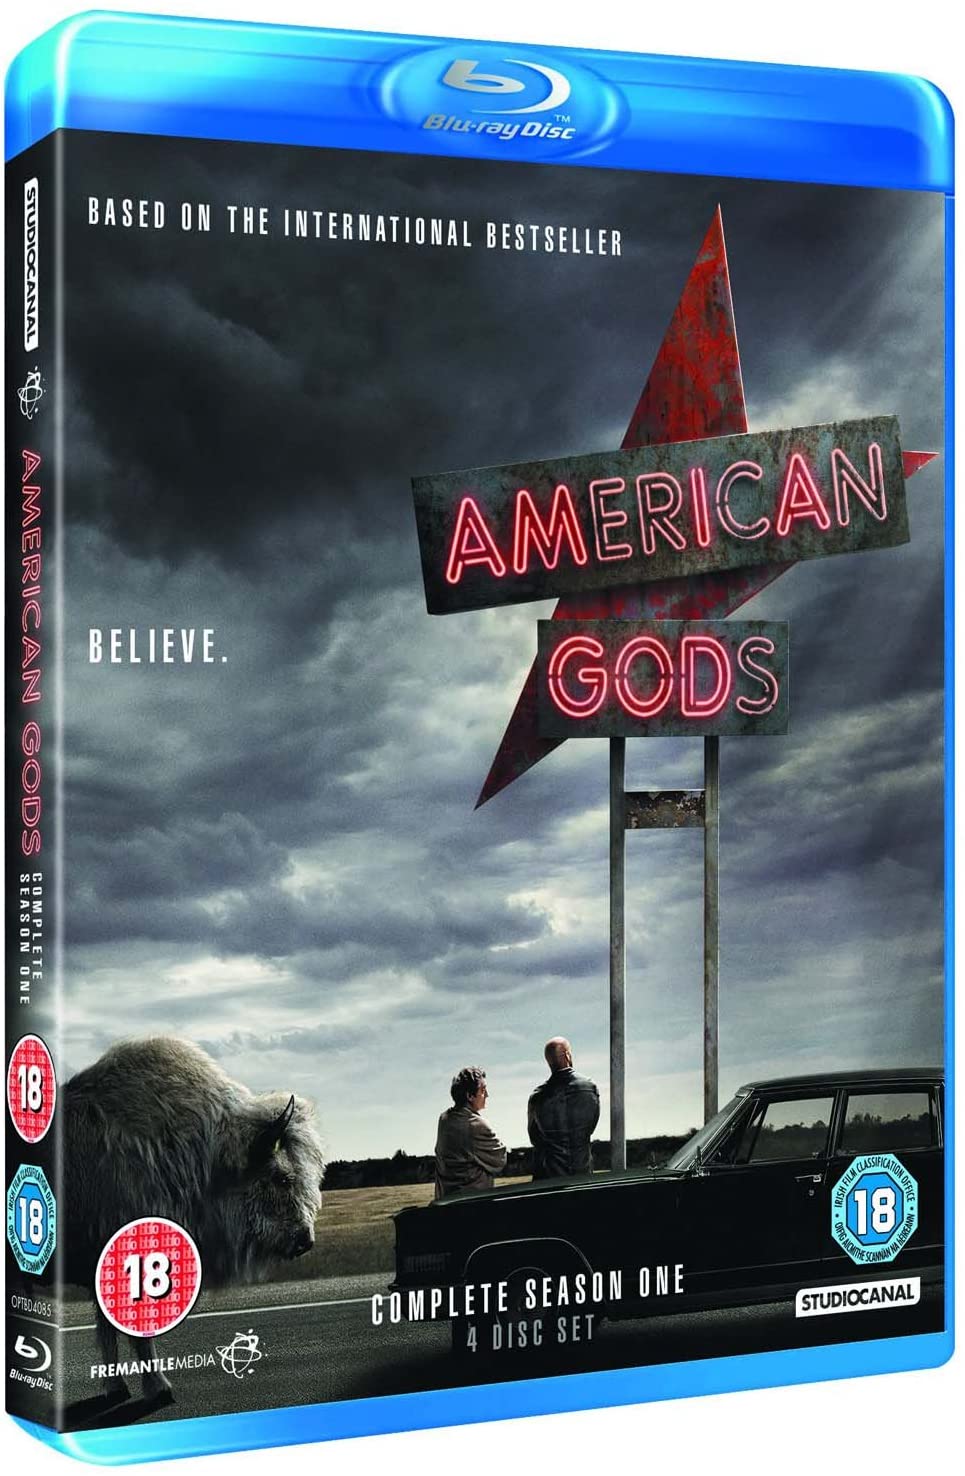 Amerikanische Götter [Blu-ray] [2017]